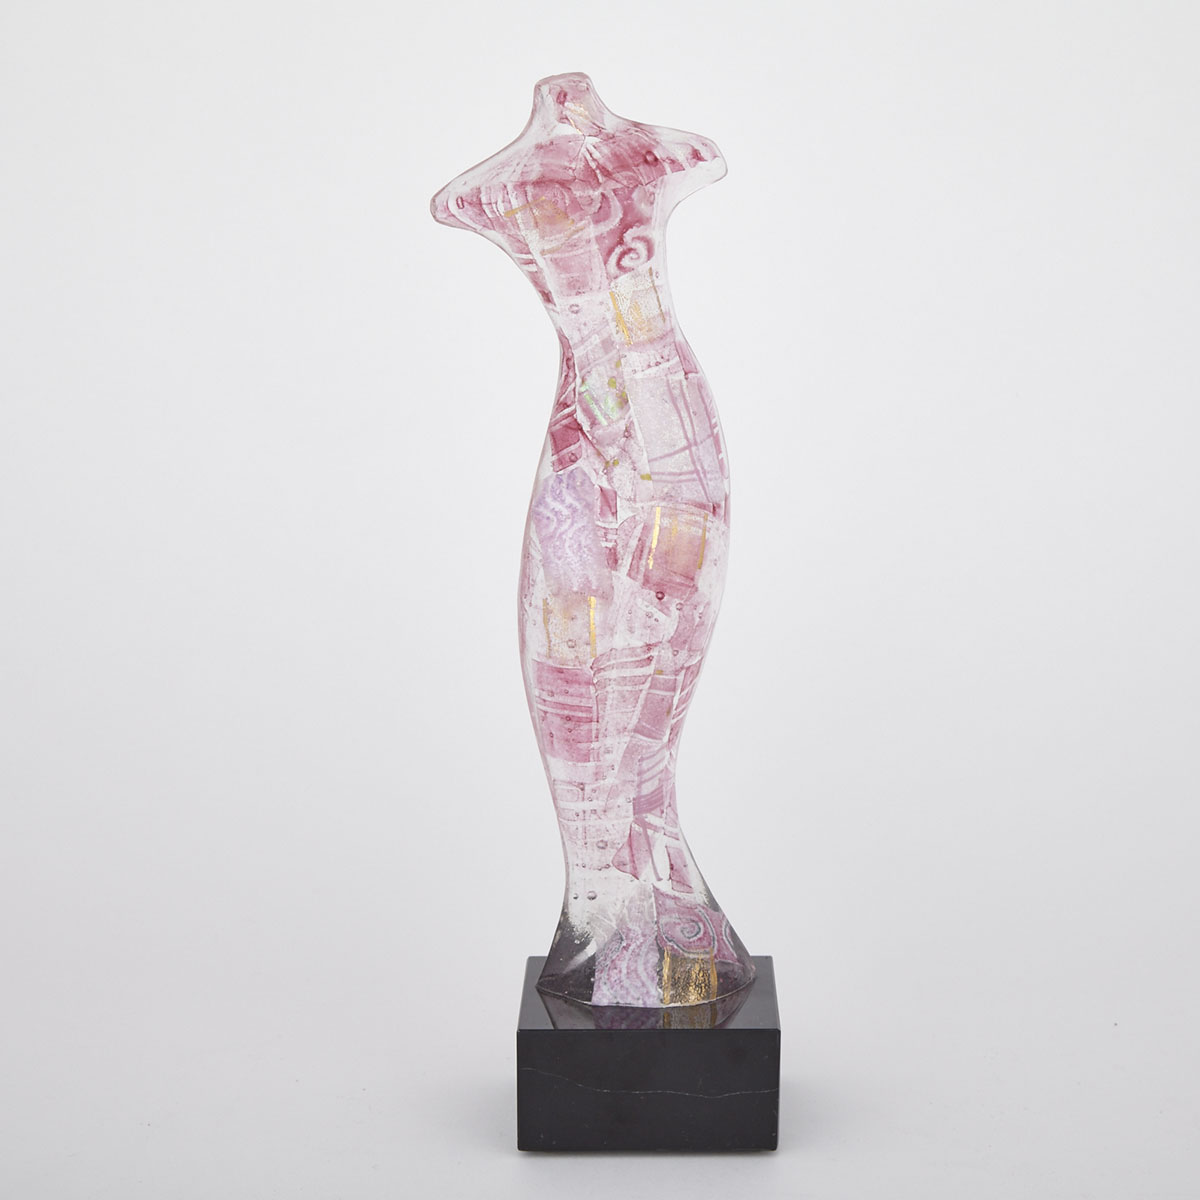 Murano Glass Sculpture of a Nude Female Figure, late 20th century